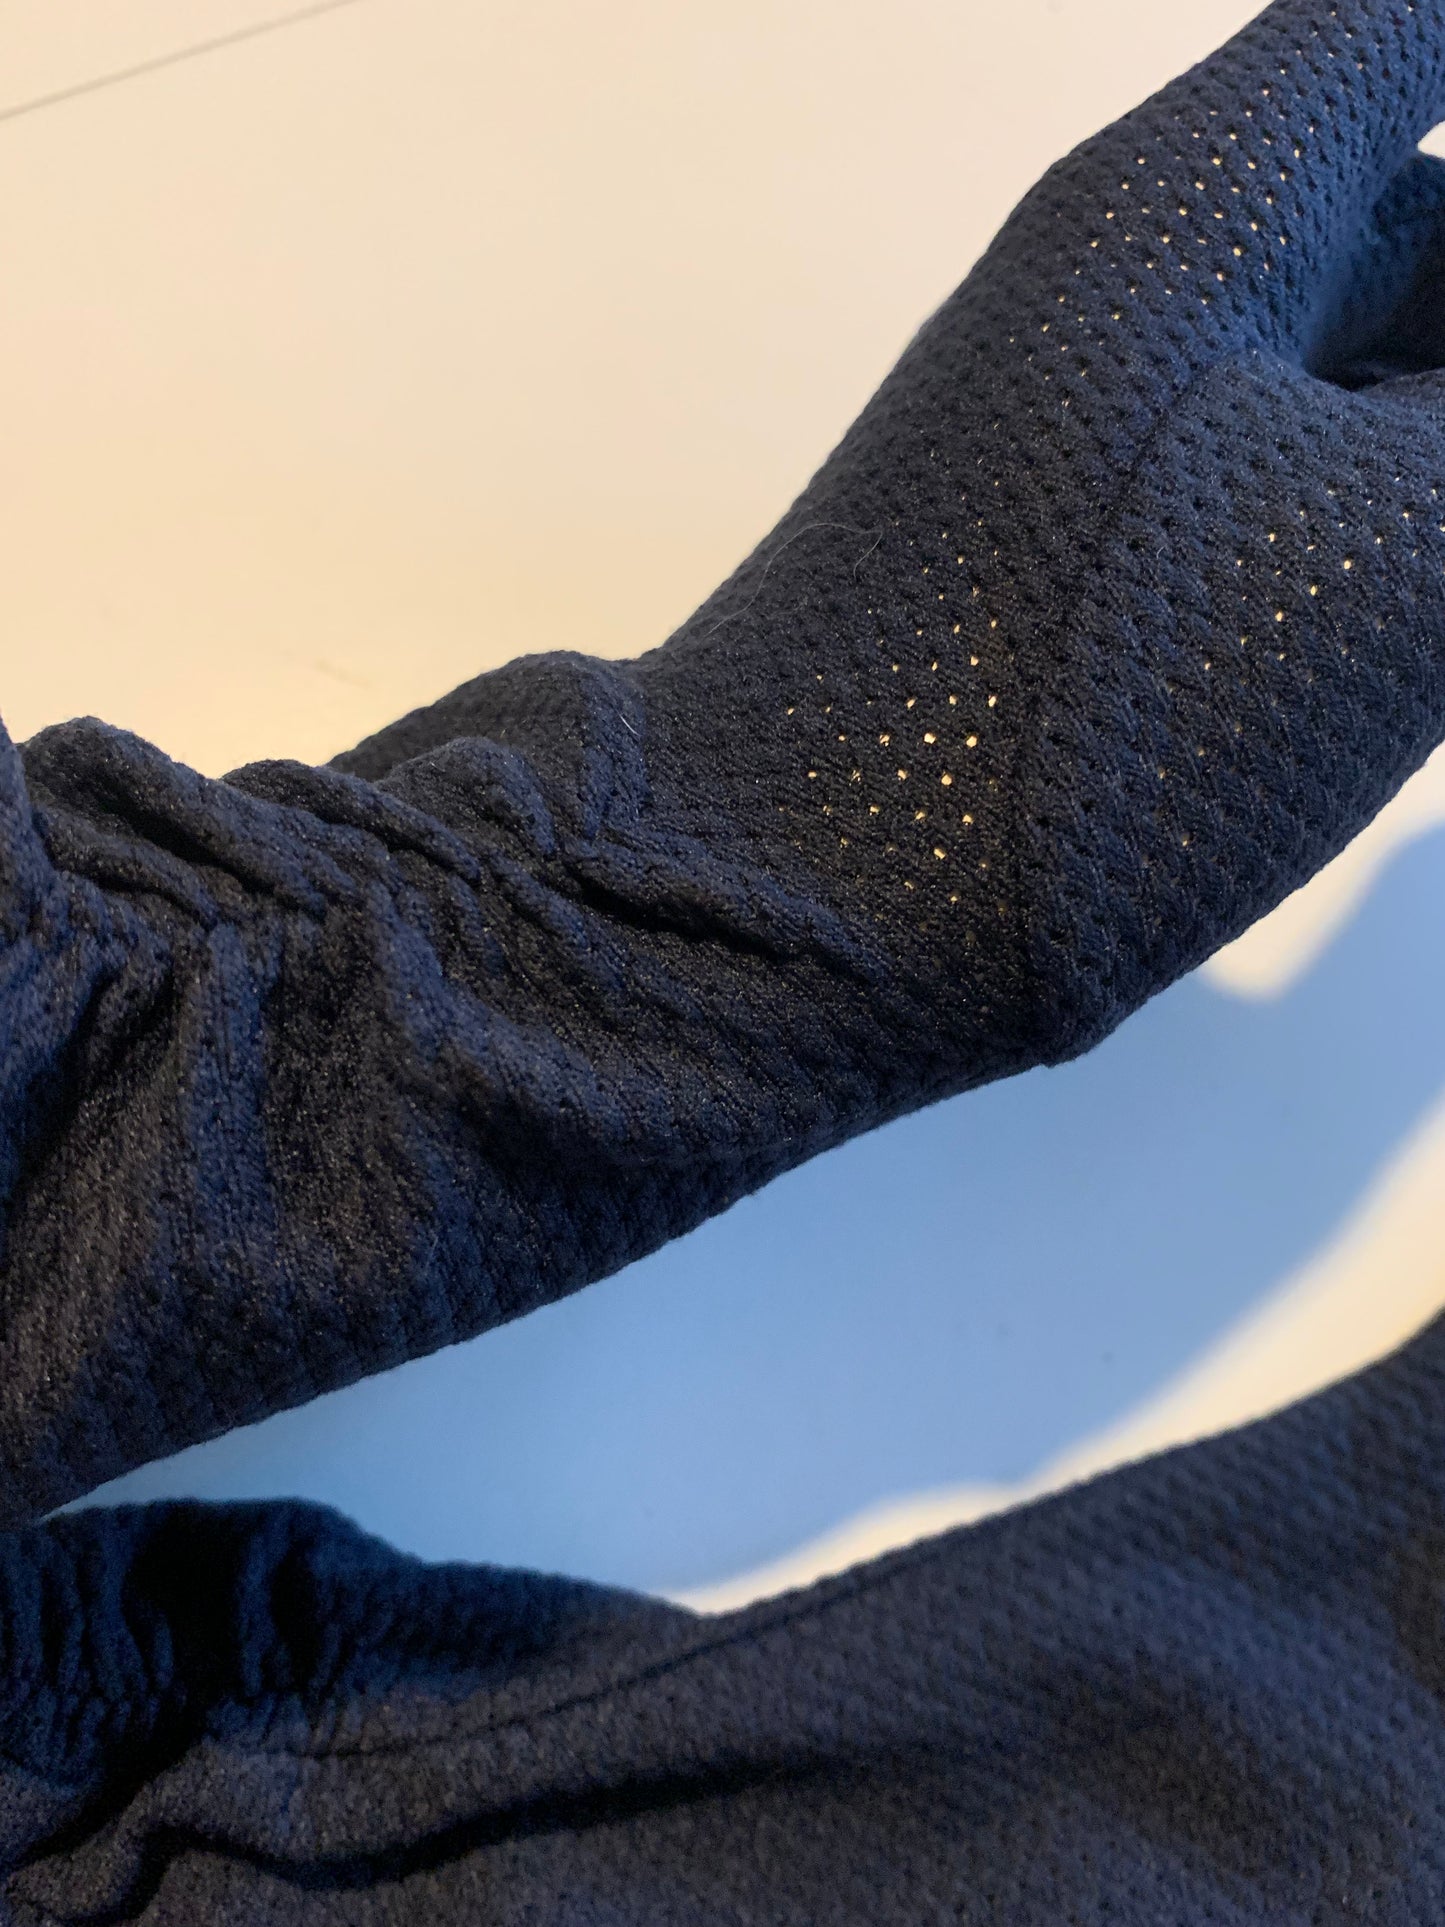 Deep Blue Textured Nylon Wrist Length Gloves circa 1960s